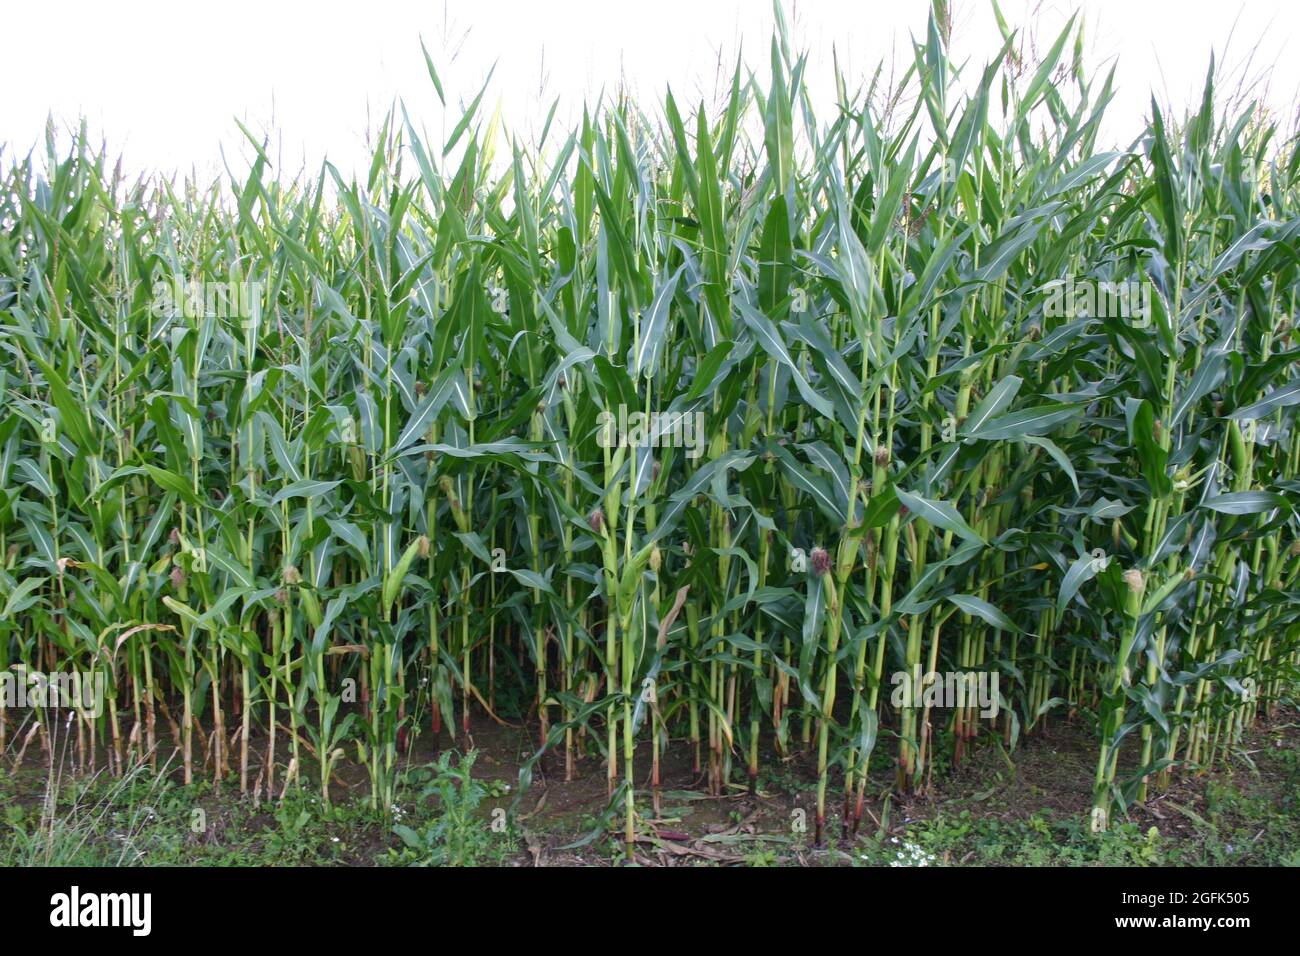 Maisfeld mit 3m hohen Pflanzen Foto Stock